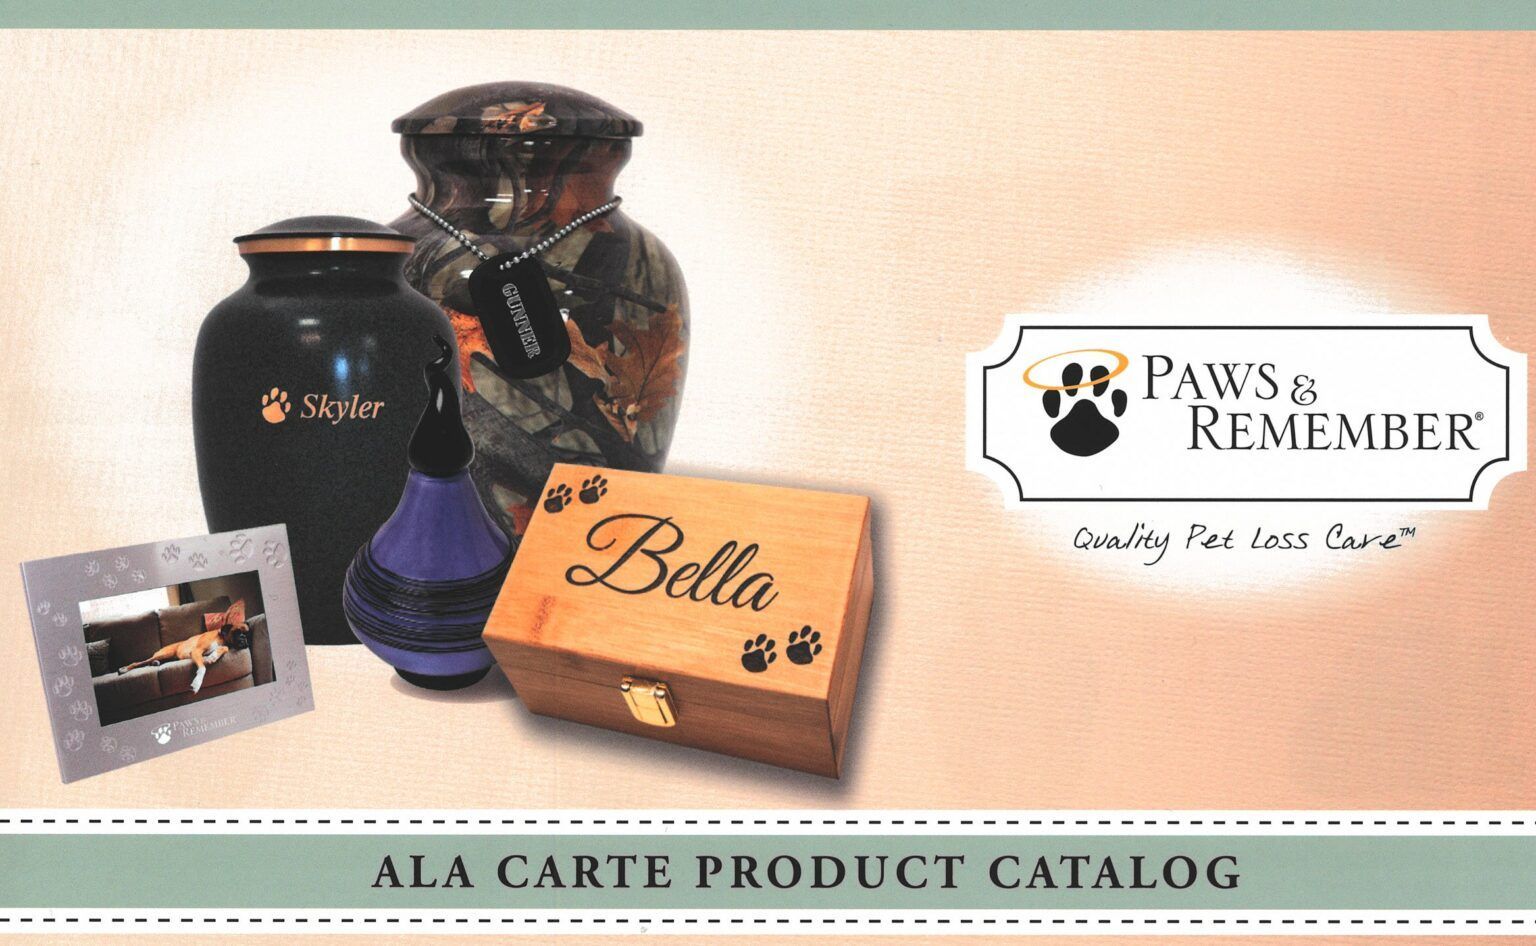 Ala Carte Product Catalog Image